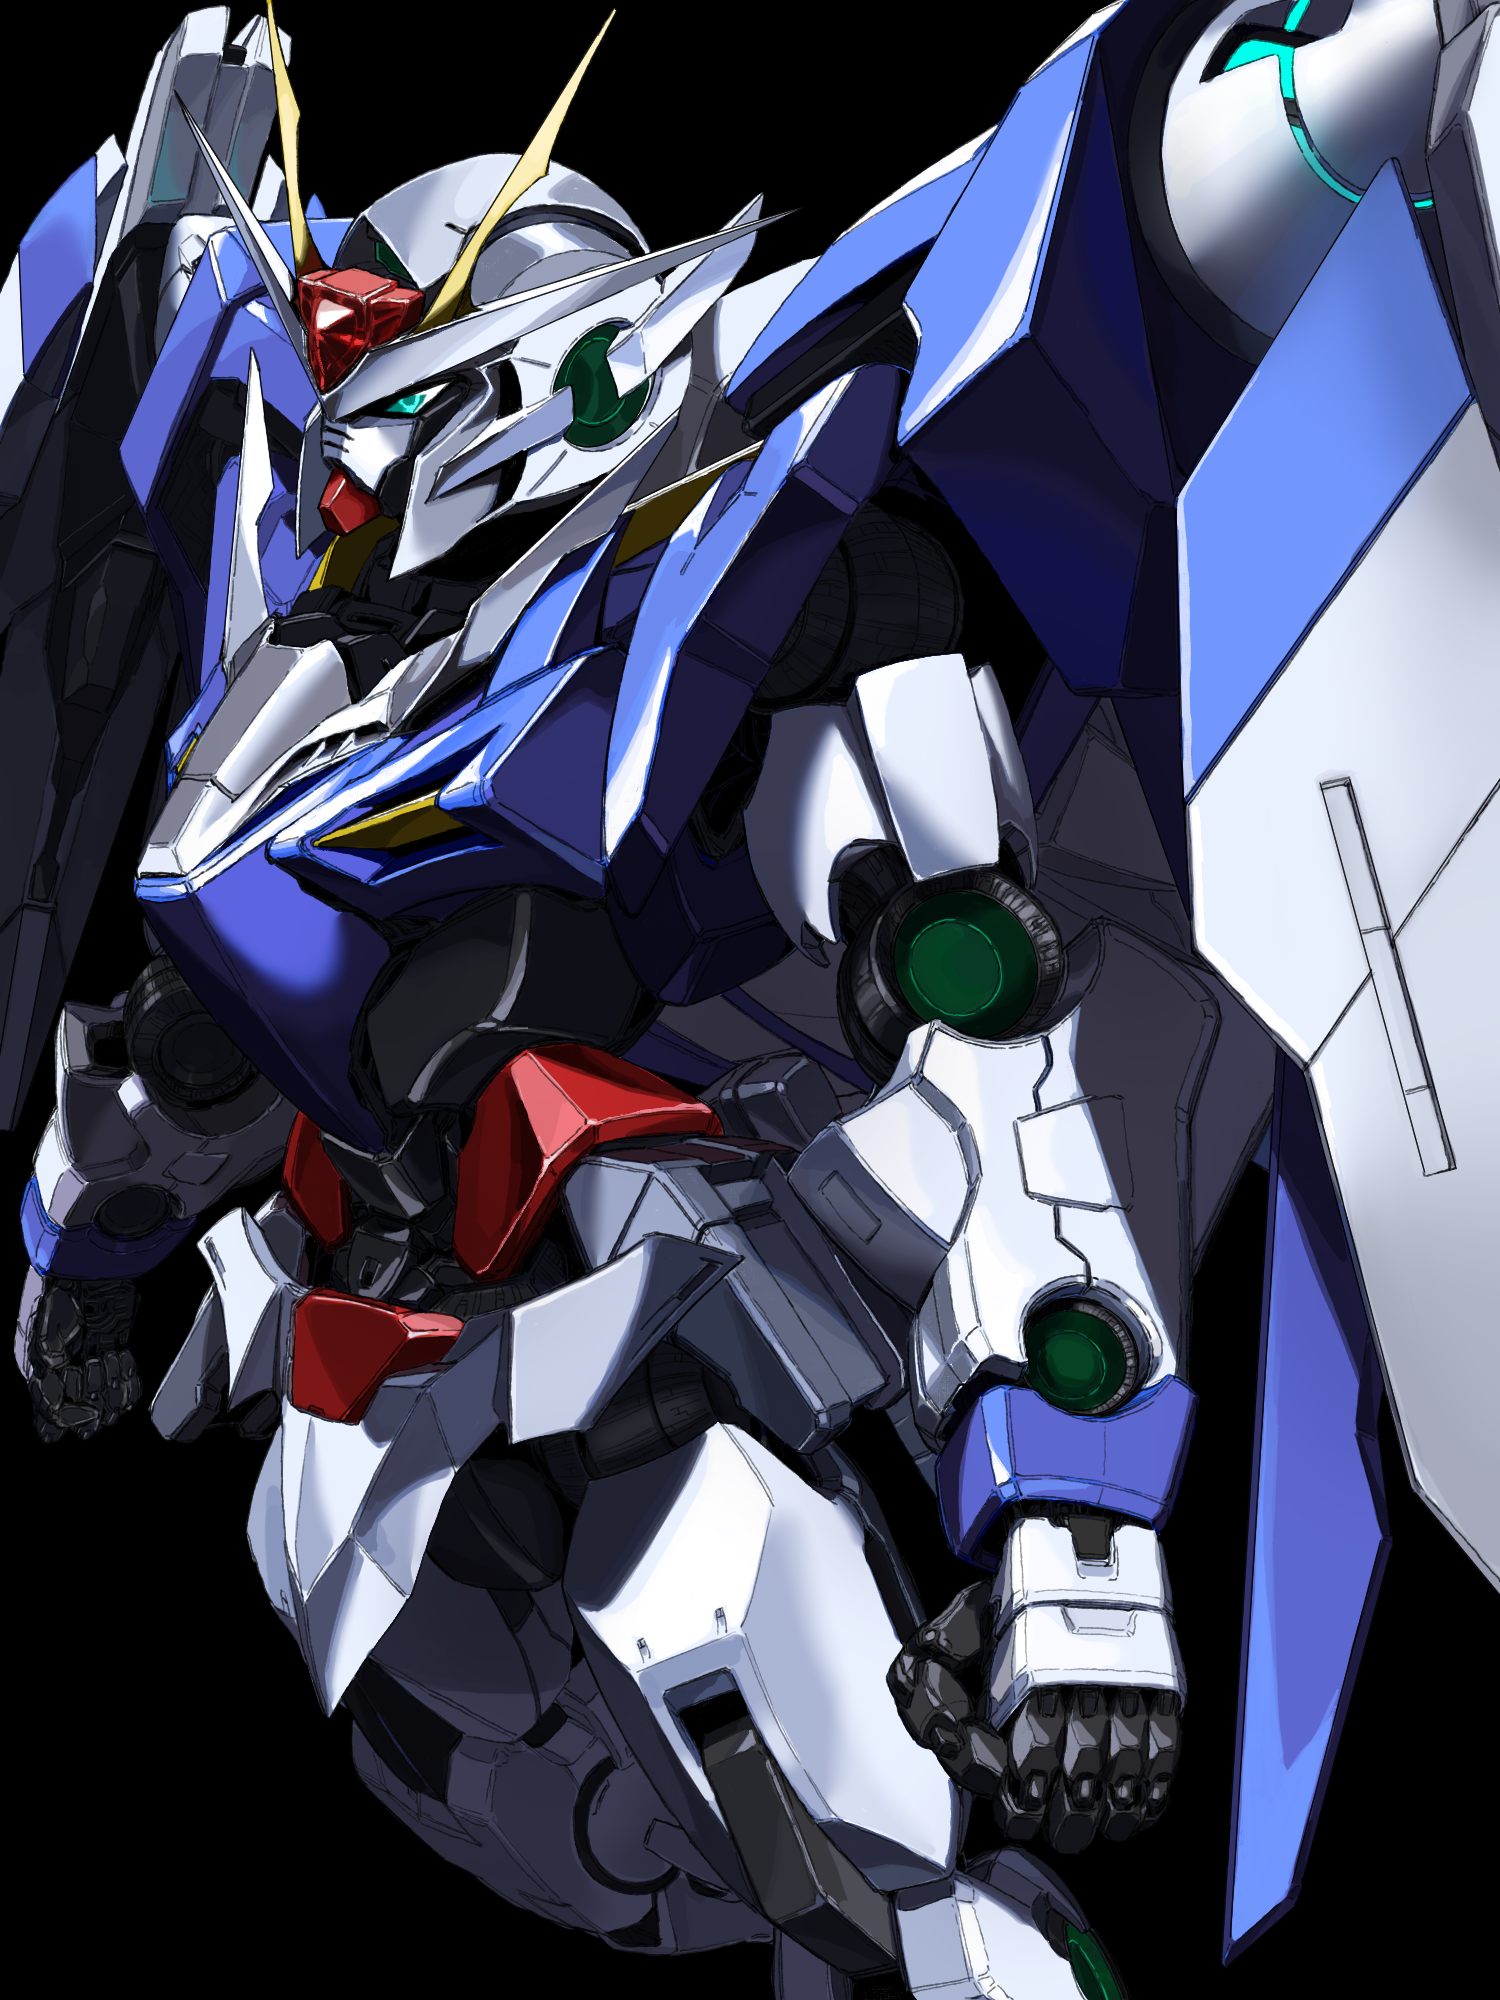 Anime 1500x2000 anime mechs Super Robot Taisen Mobile Suit Gundam 00 Gundam 00 Raiser artwork digital art fan art